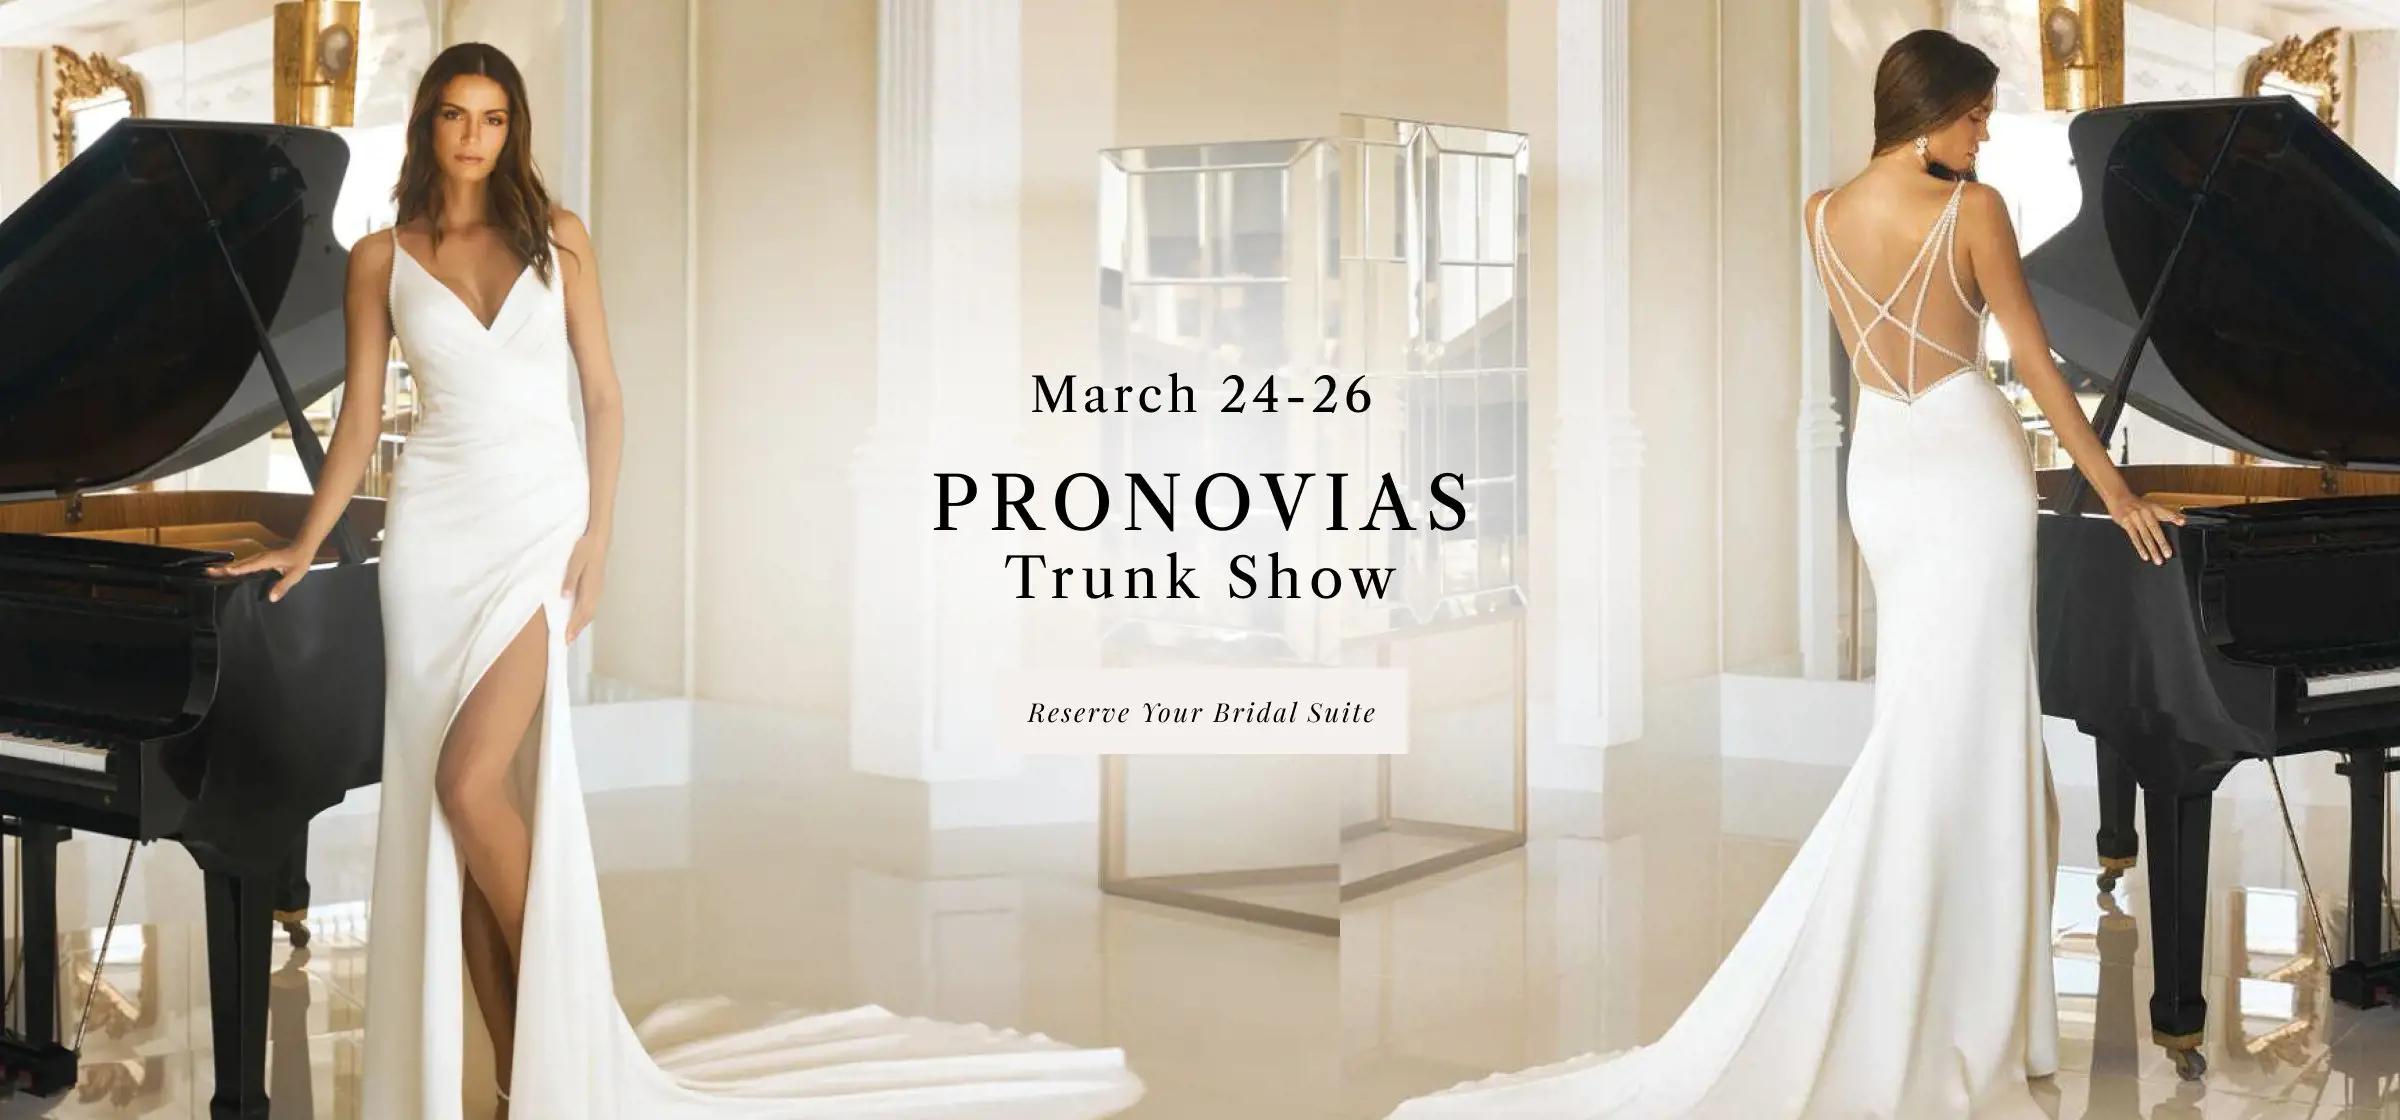 "Pronovias Trunk Show" banner for desktop